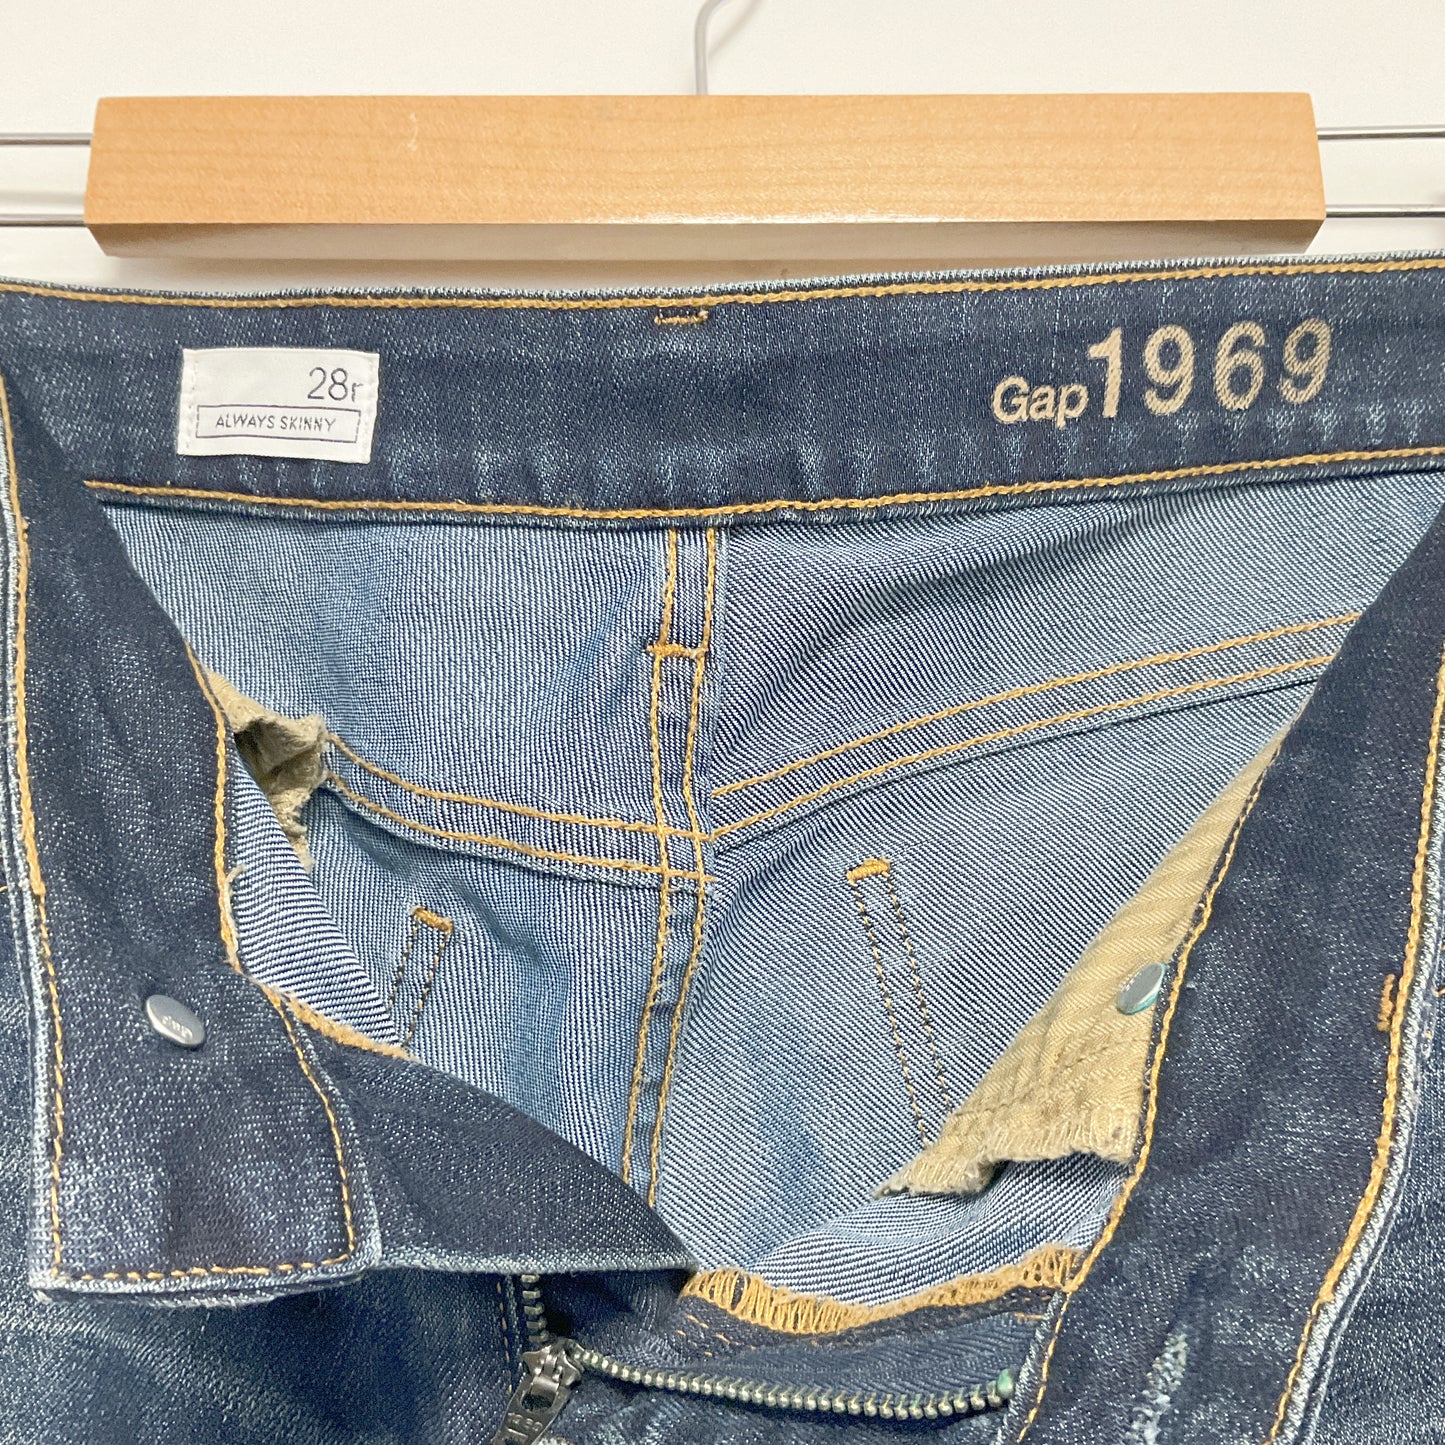 Gap 1969 - Always Skinny Jeans